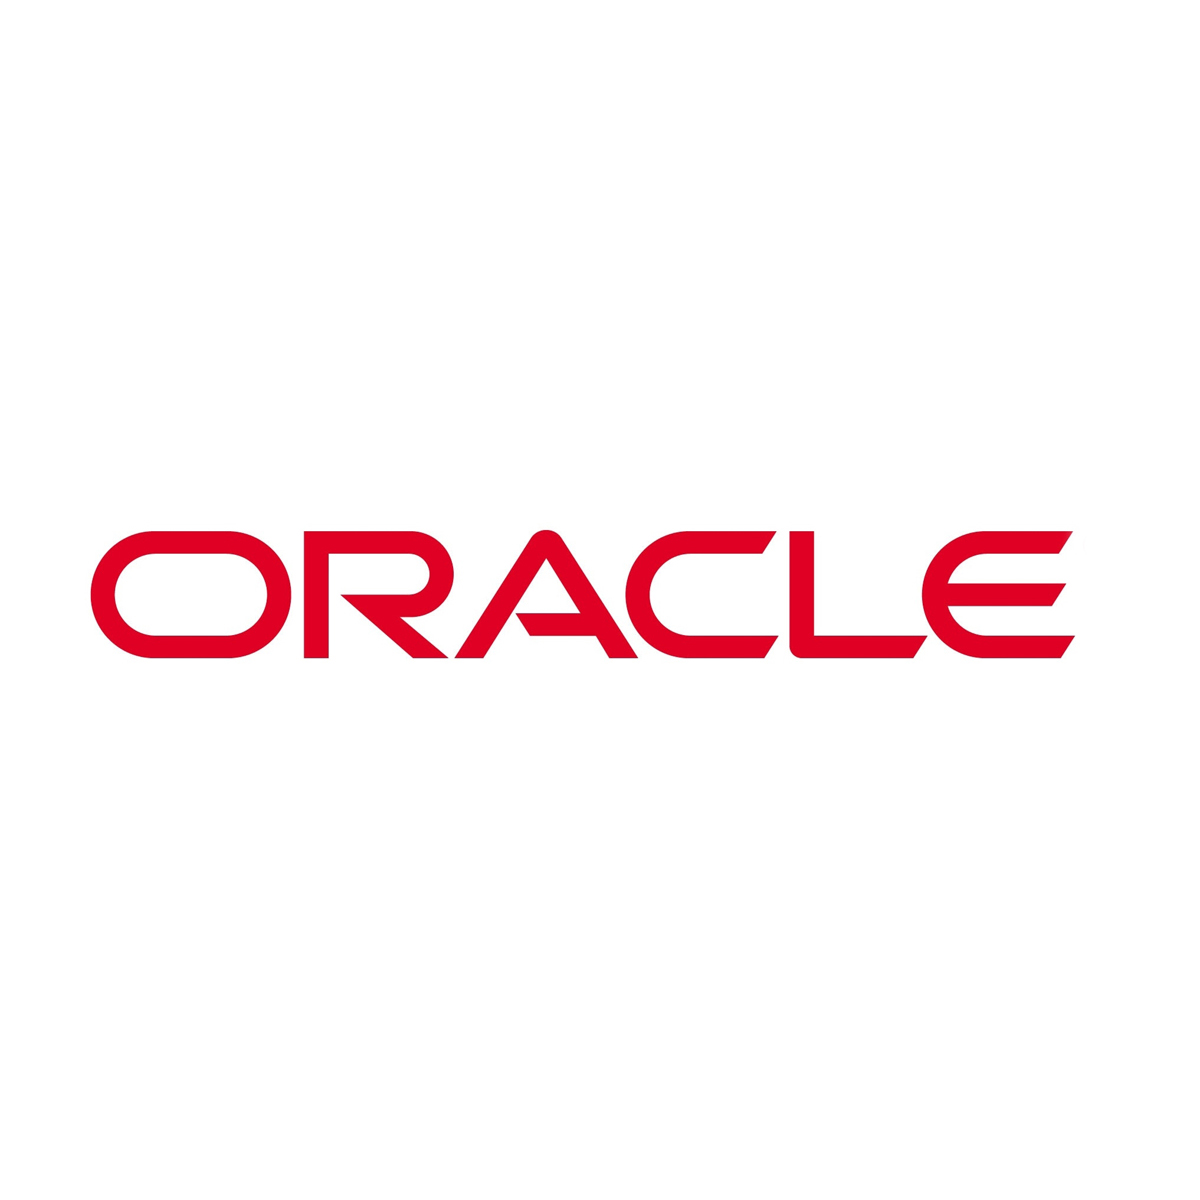  Leading Enterprise CRM Application Logo: Oracle